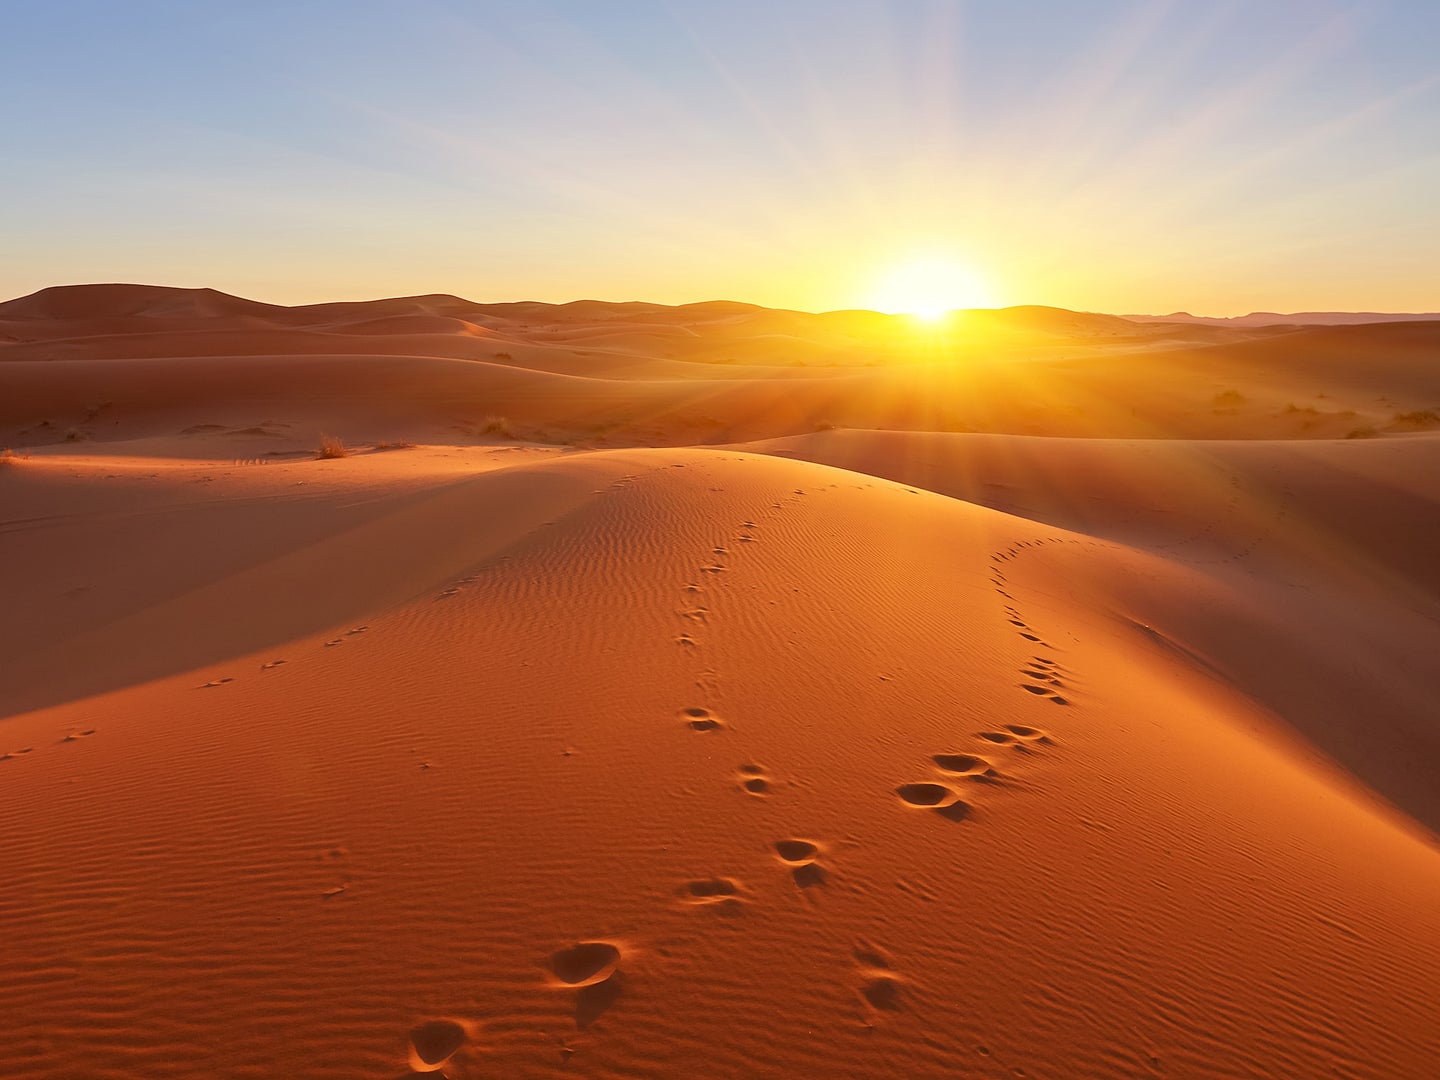 Multiple sets of footprints on desert sand dunes as sun sets on horizon